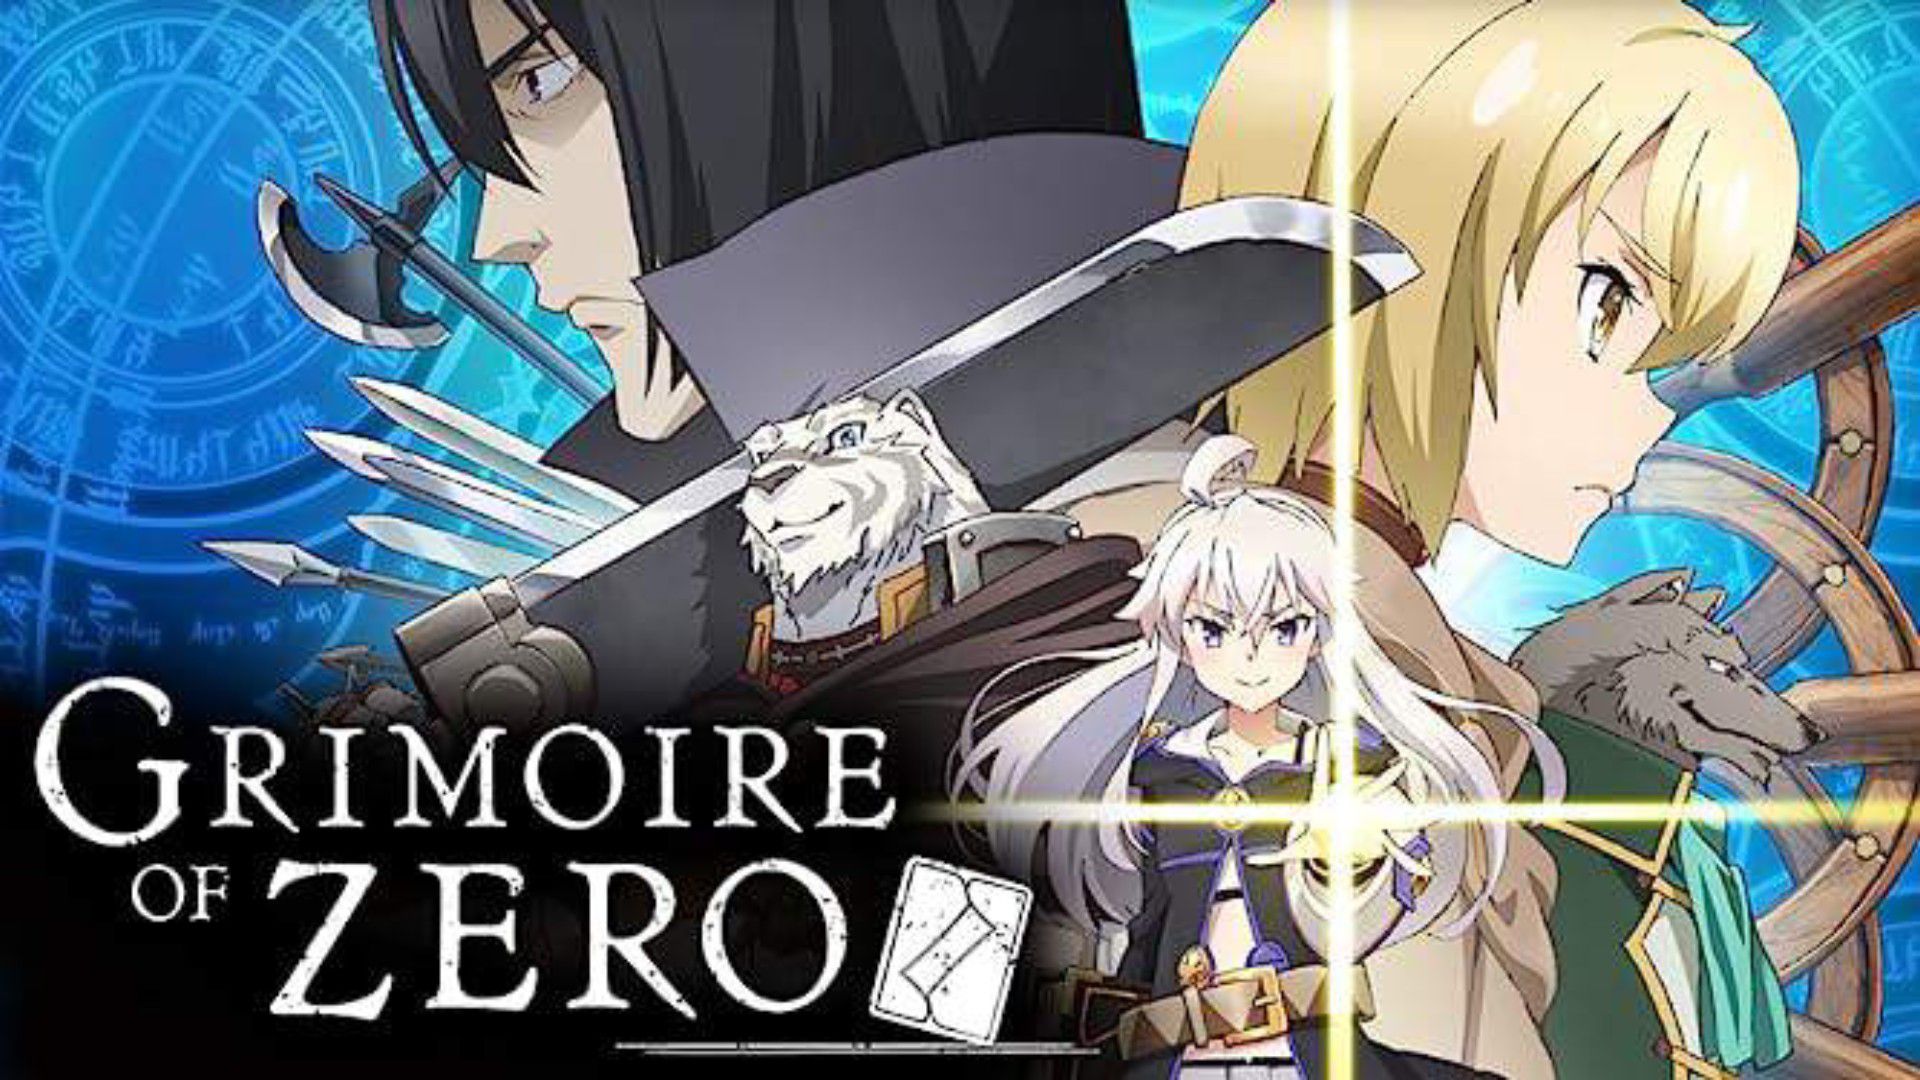 Anime Grimoire of Zero HD Wallpaper